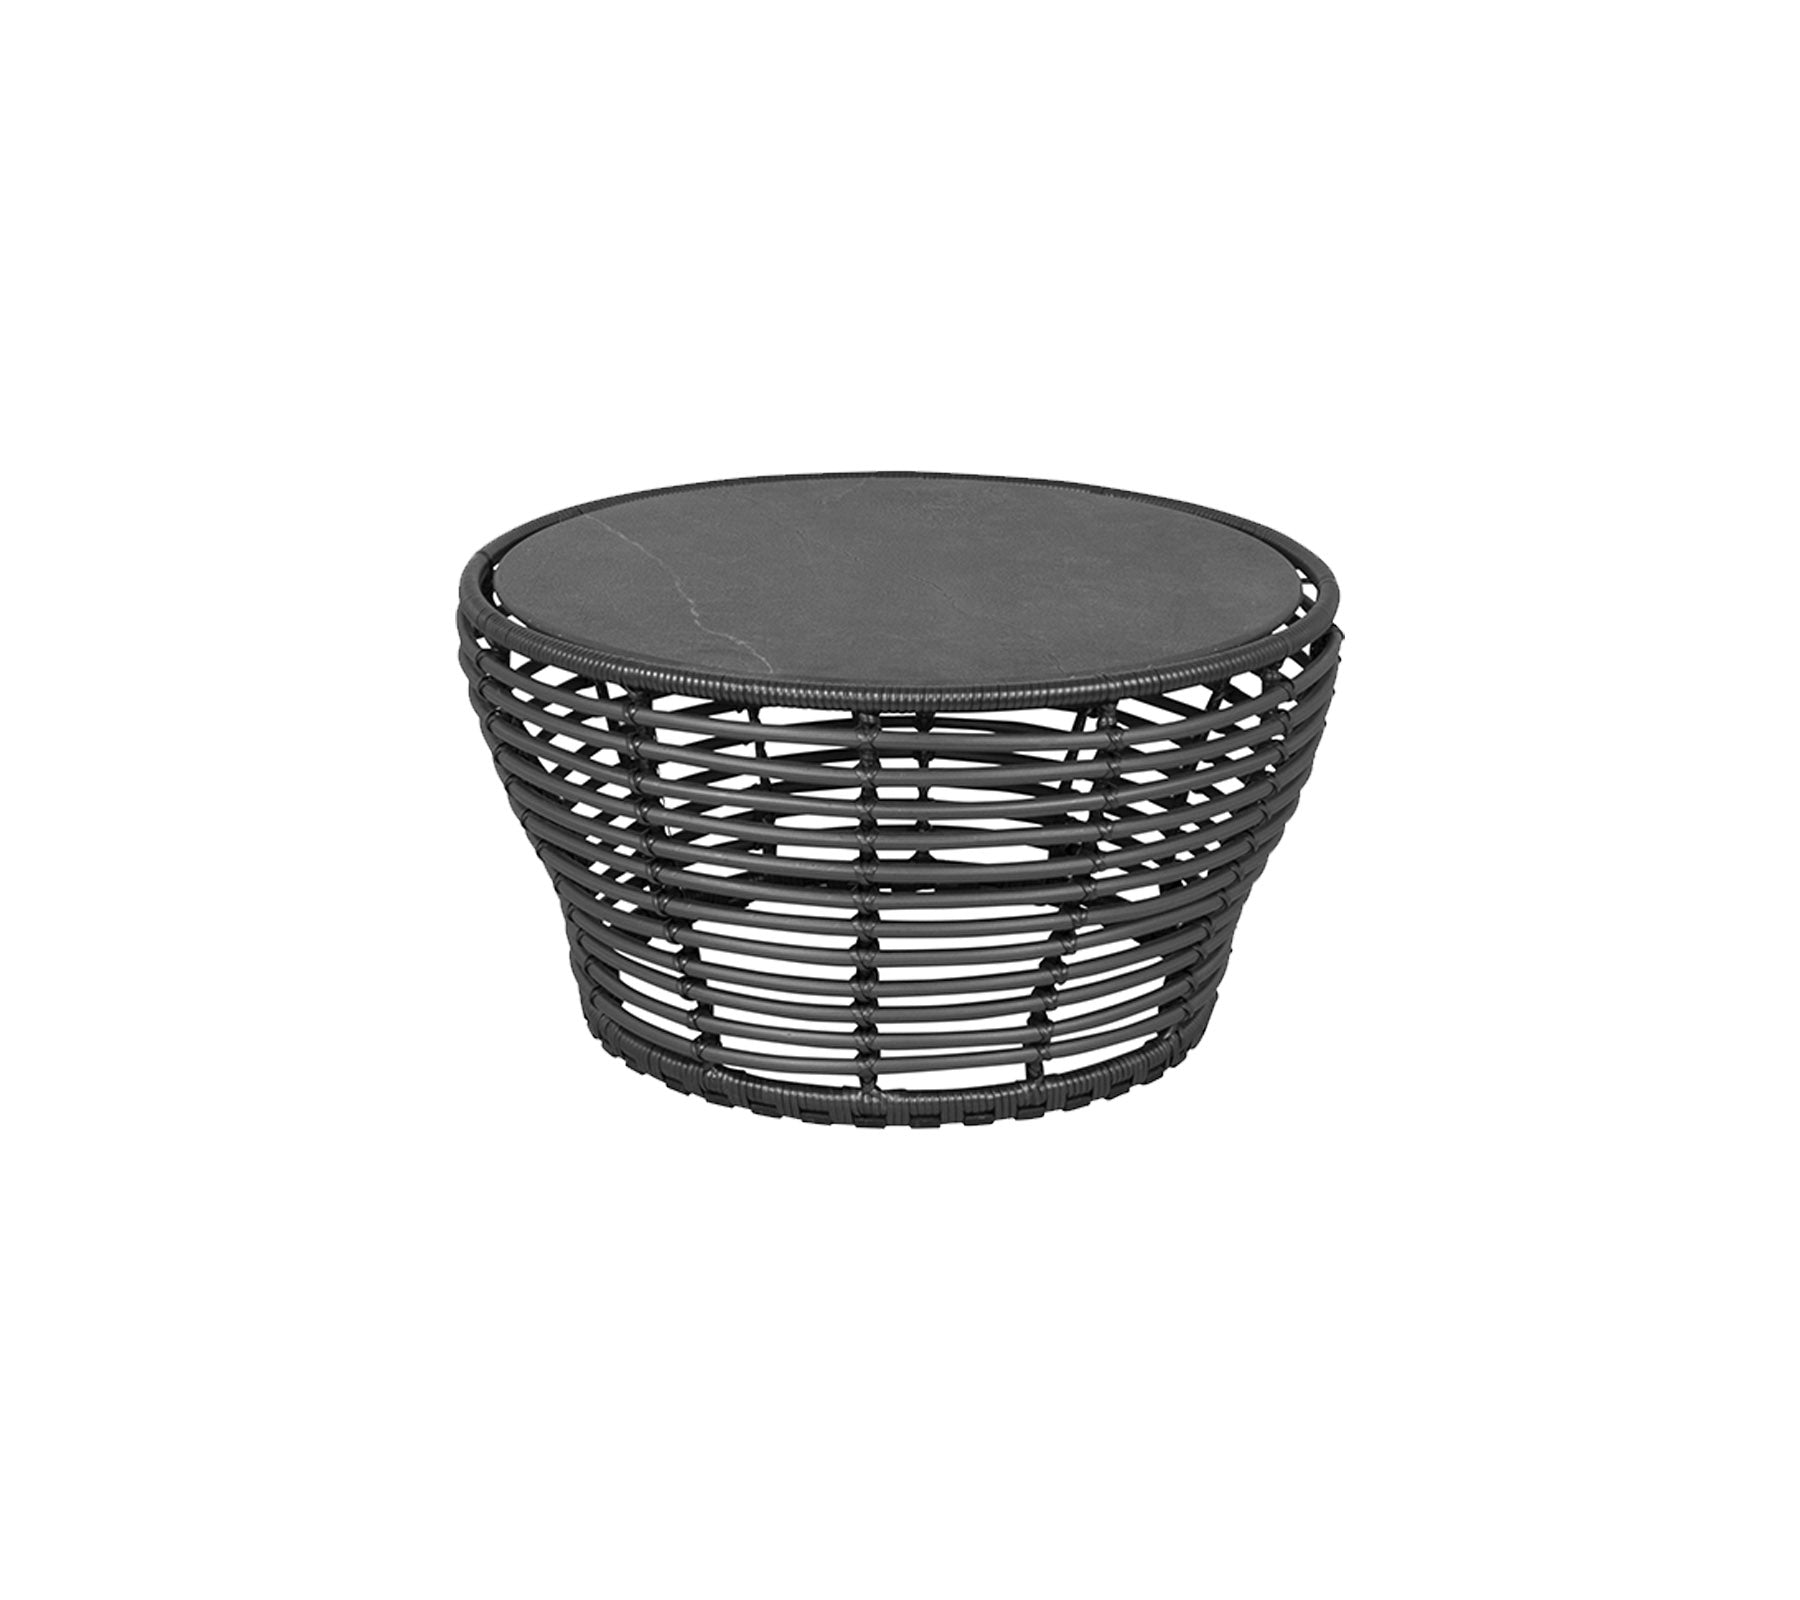 Cane-line Basket Coffee Table, Medium 53201G